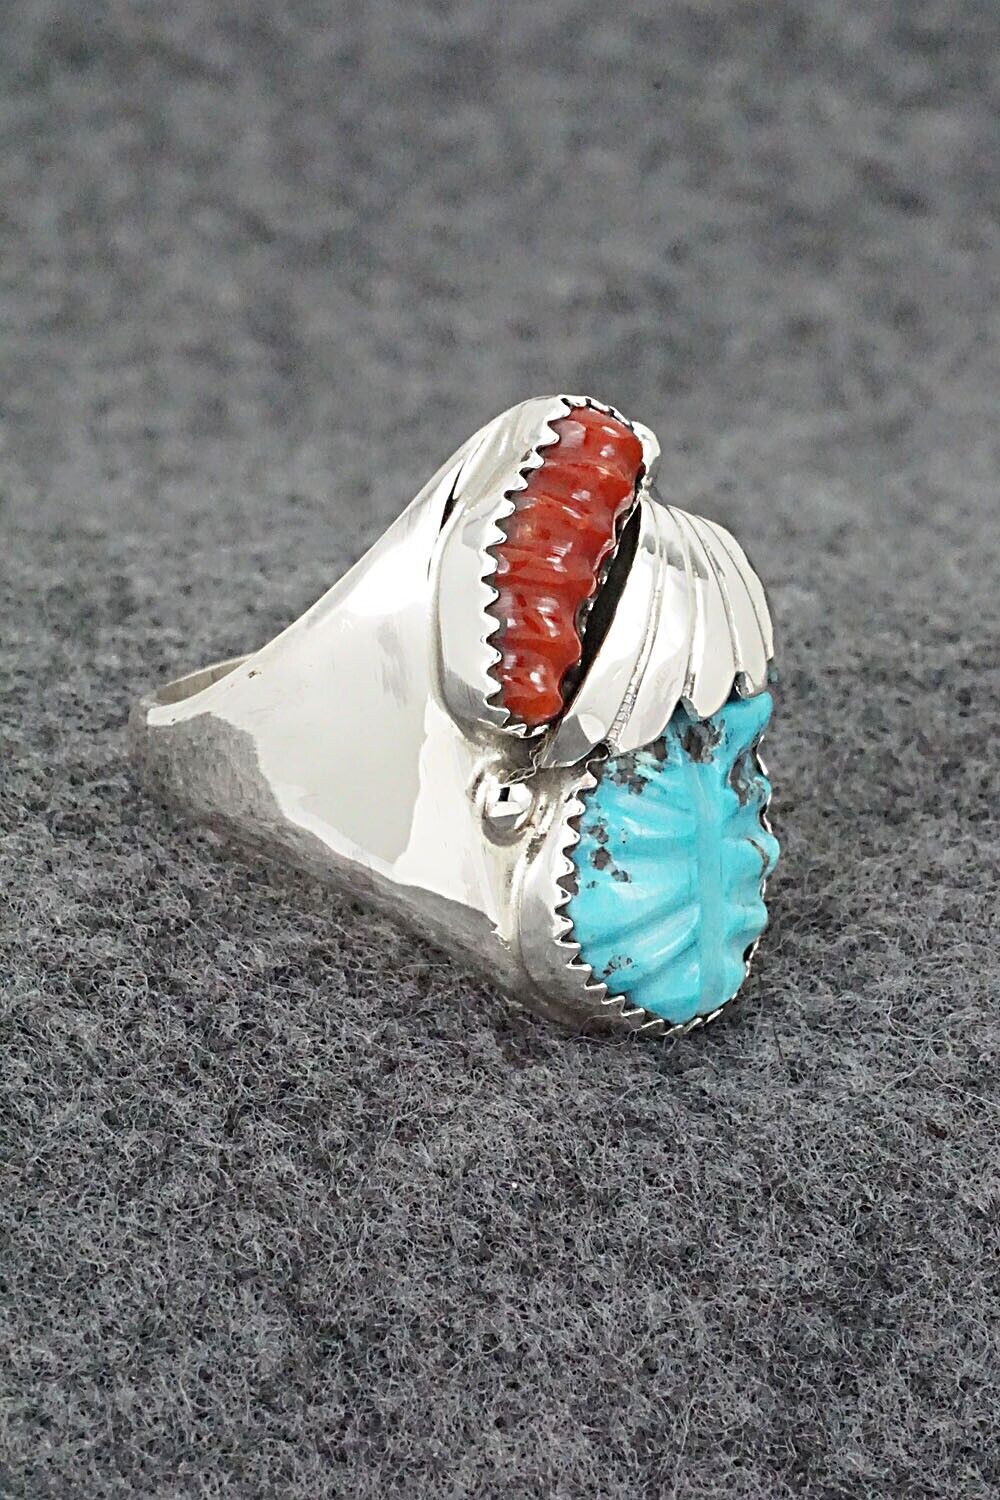 Coral, Turquoise & Sterling Silver Ring - Lyolita Tsattie - Size 10